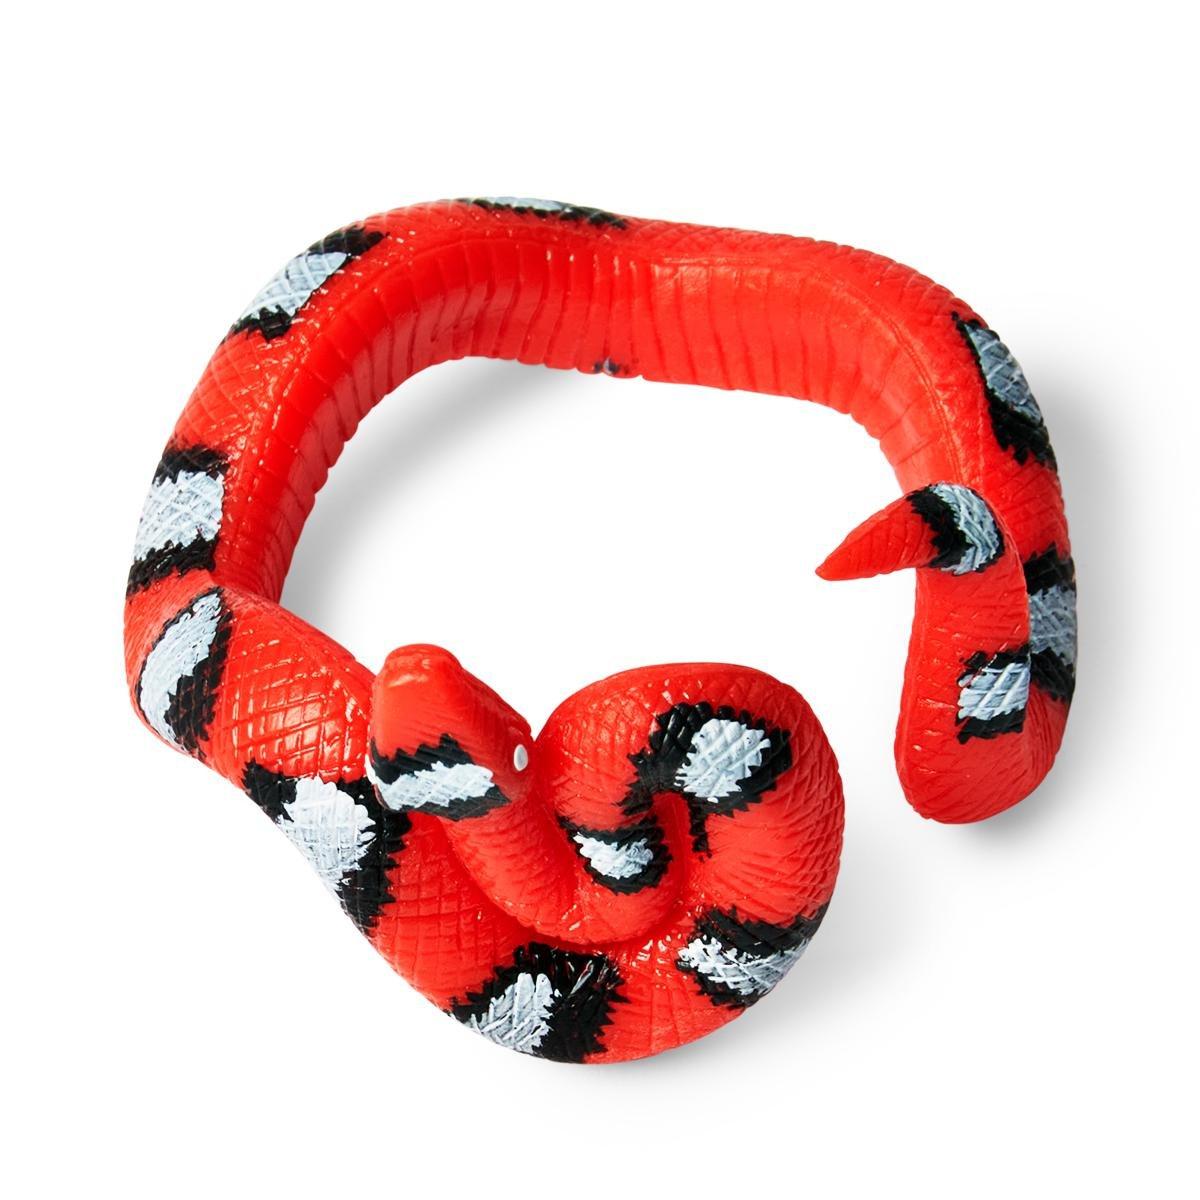 Red snake rubber bracelet toy